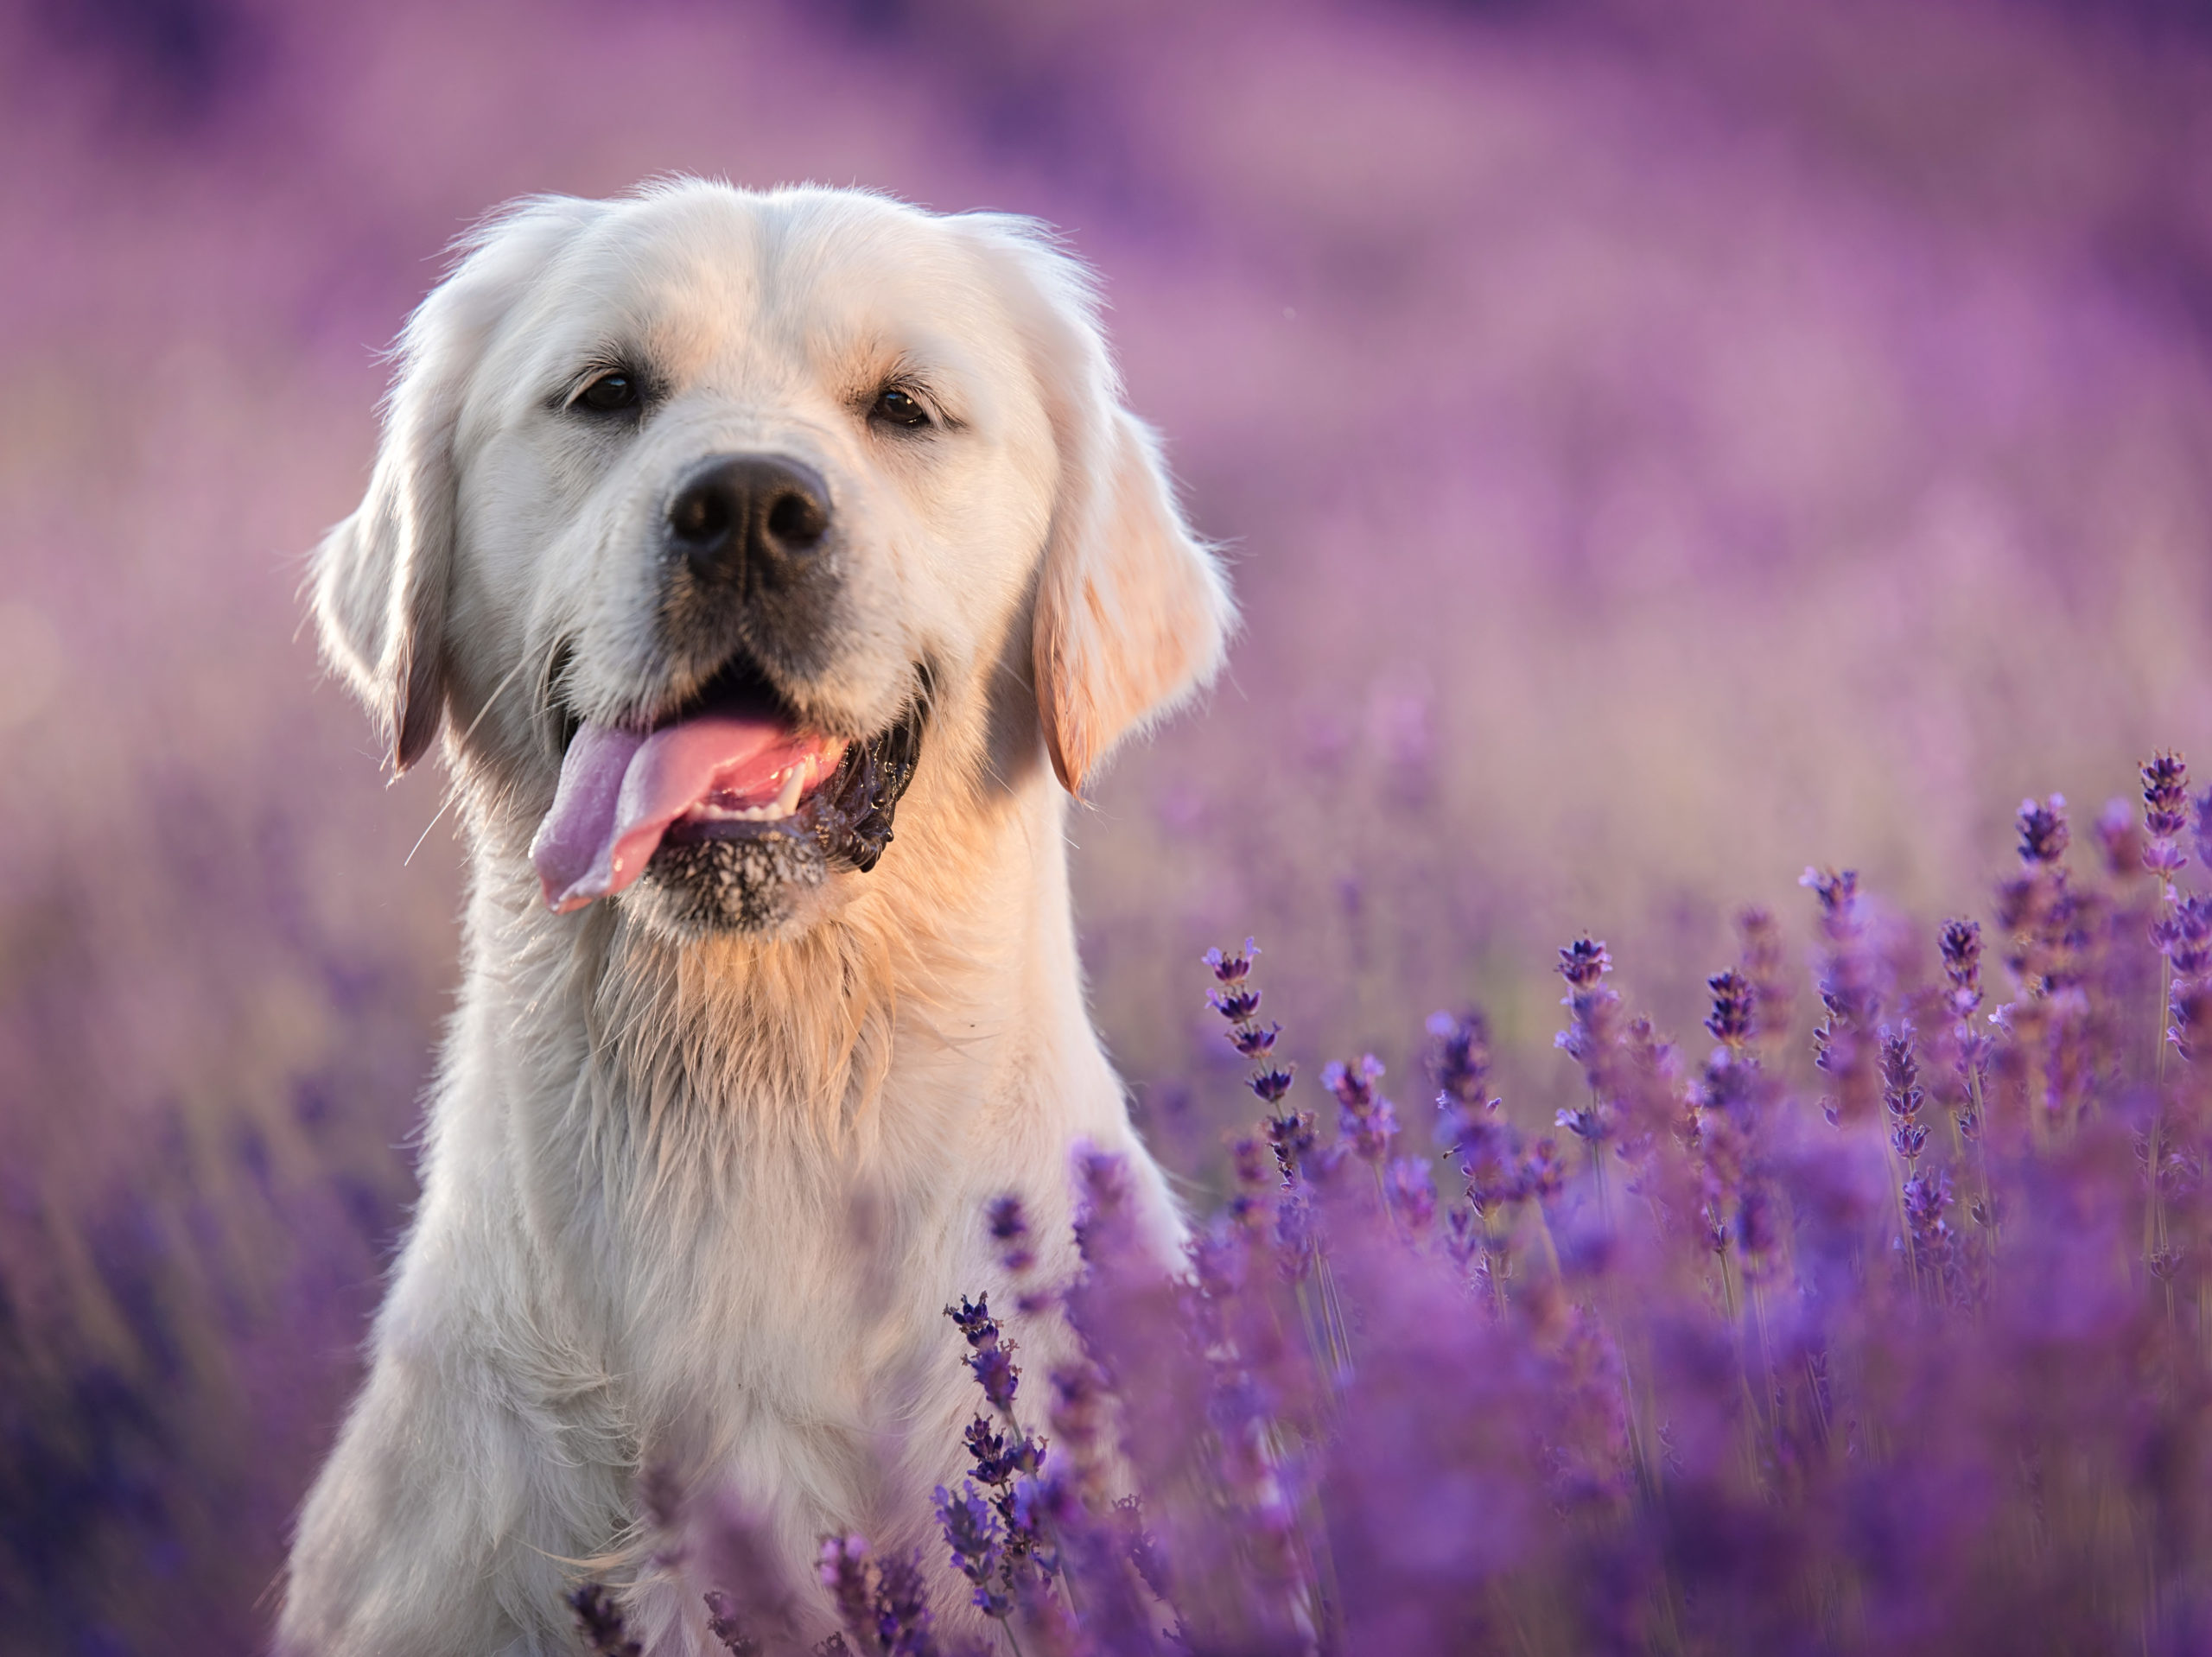 Golden retriever in a field of lavender